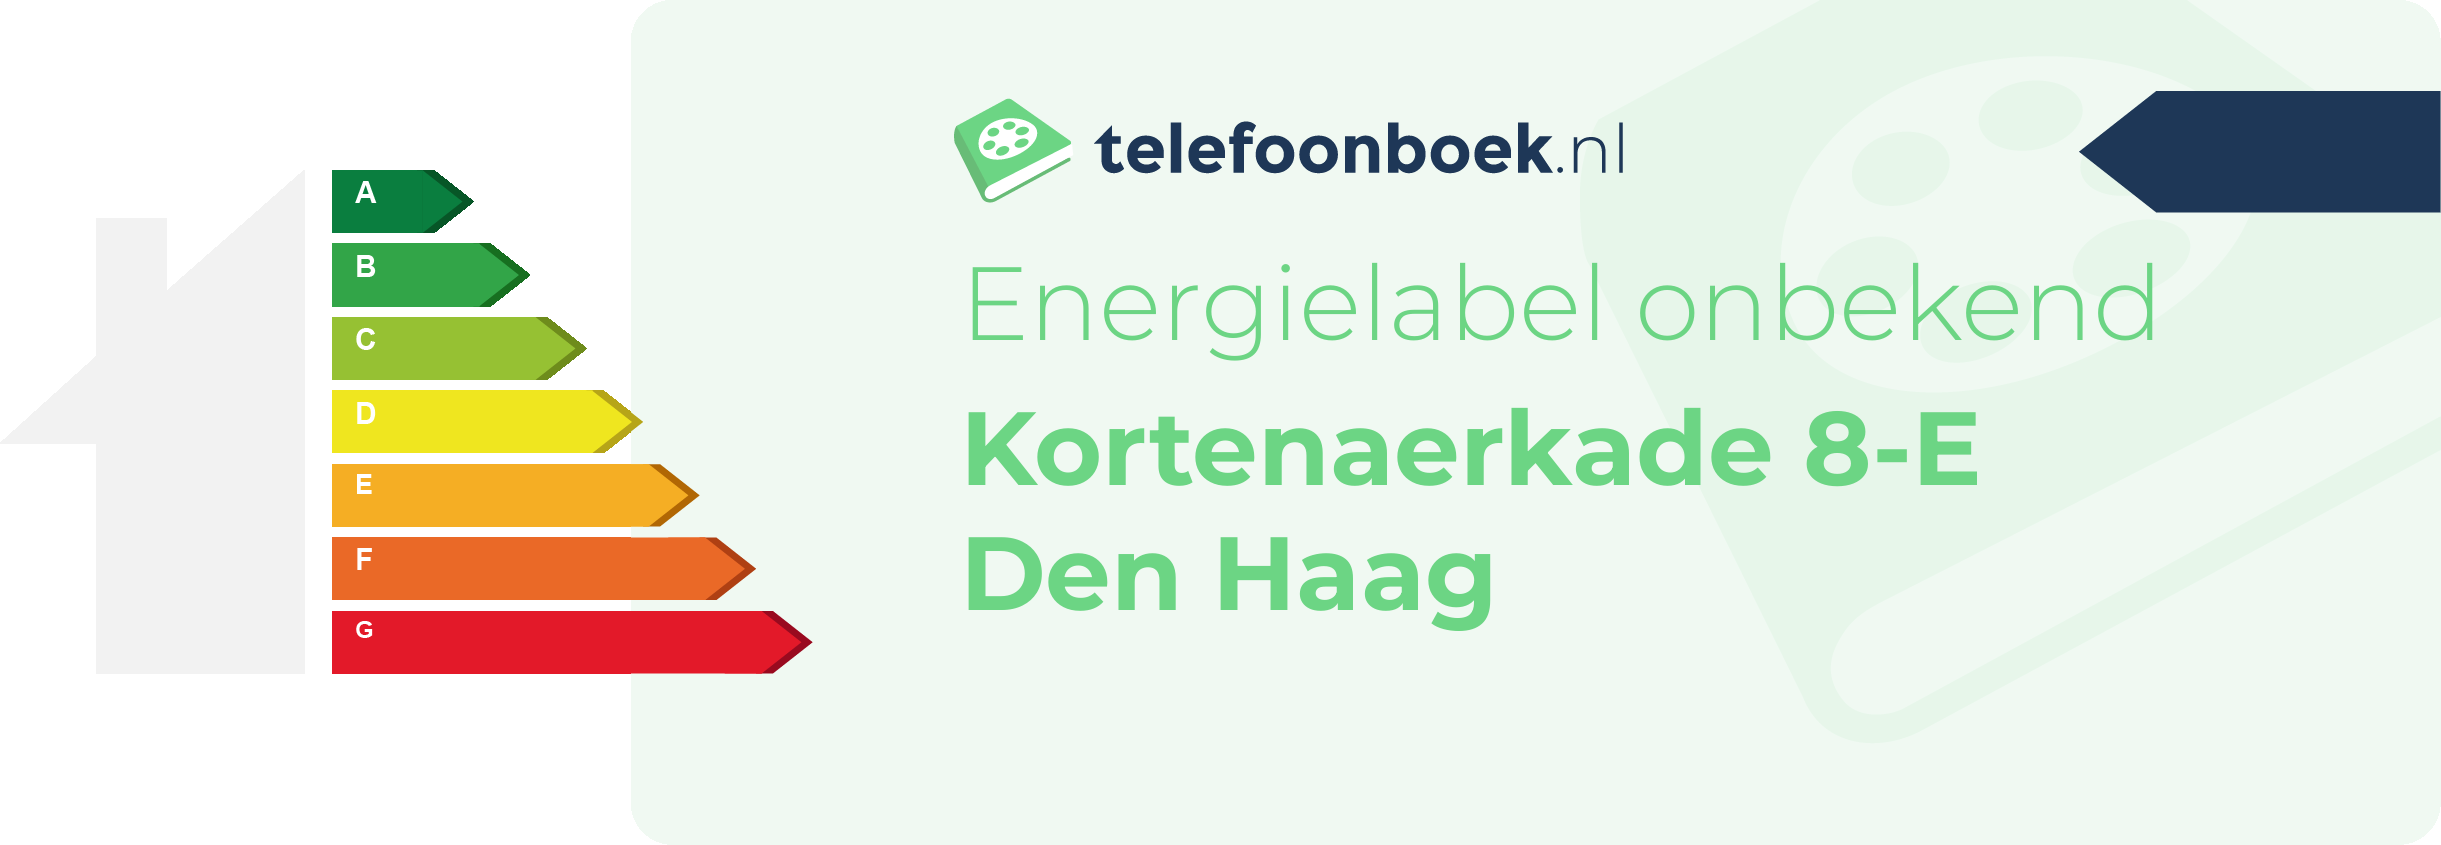 Energielabel Kortenaerkade 8-E Den Haag